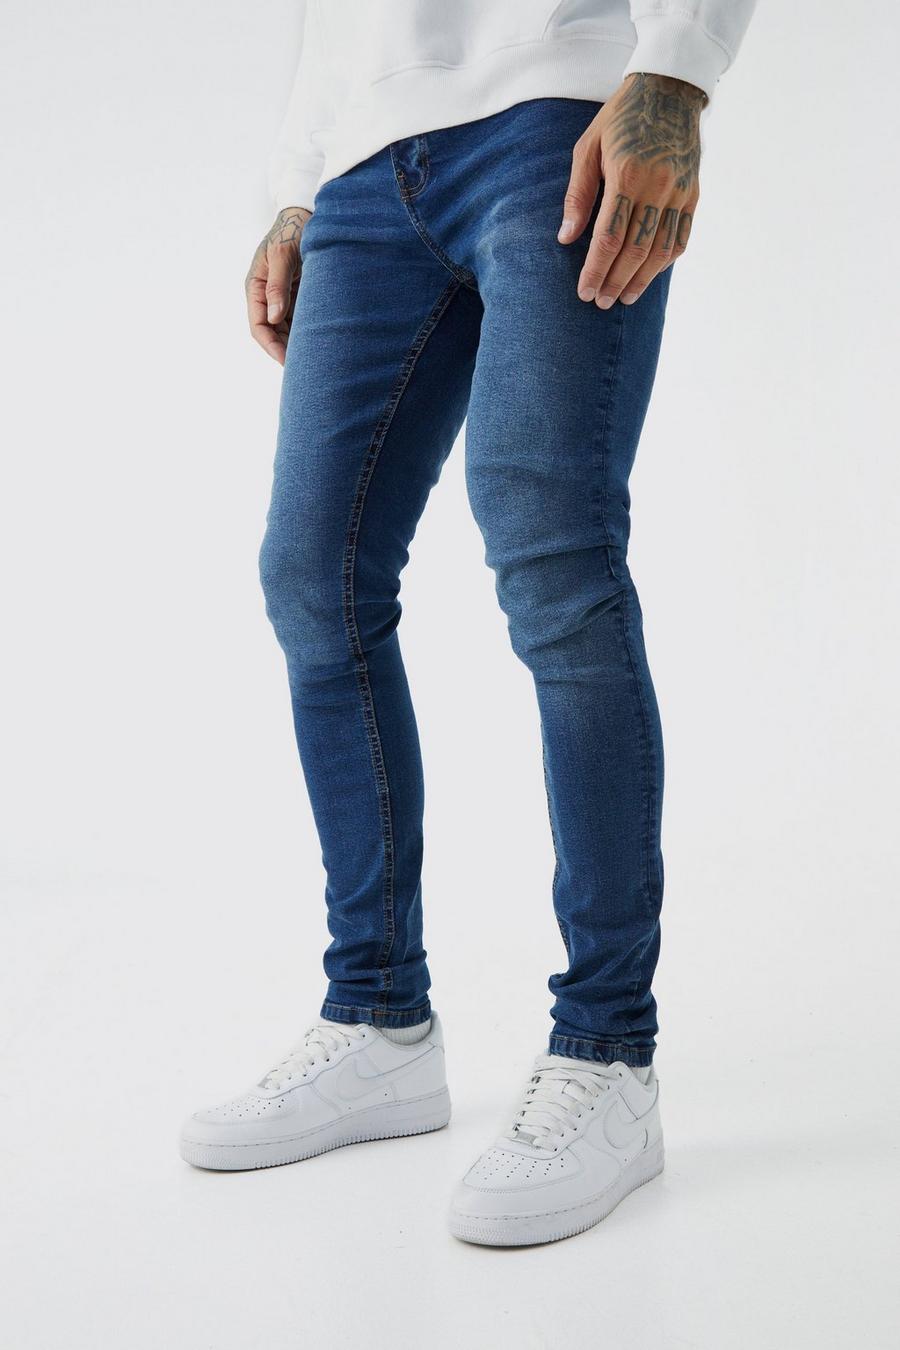 Jeans Tall Skinny Fit Stretch con pieghe sul fondo, Vintage blue